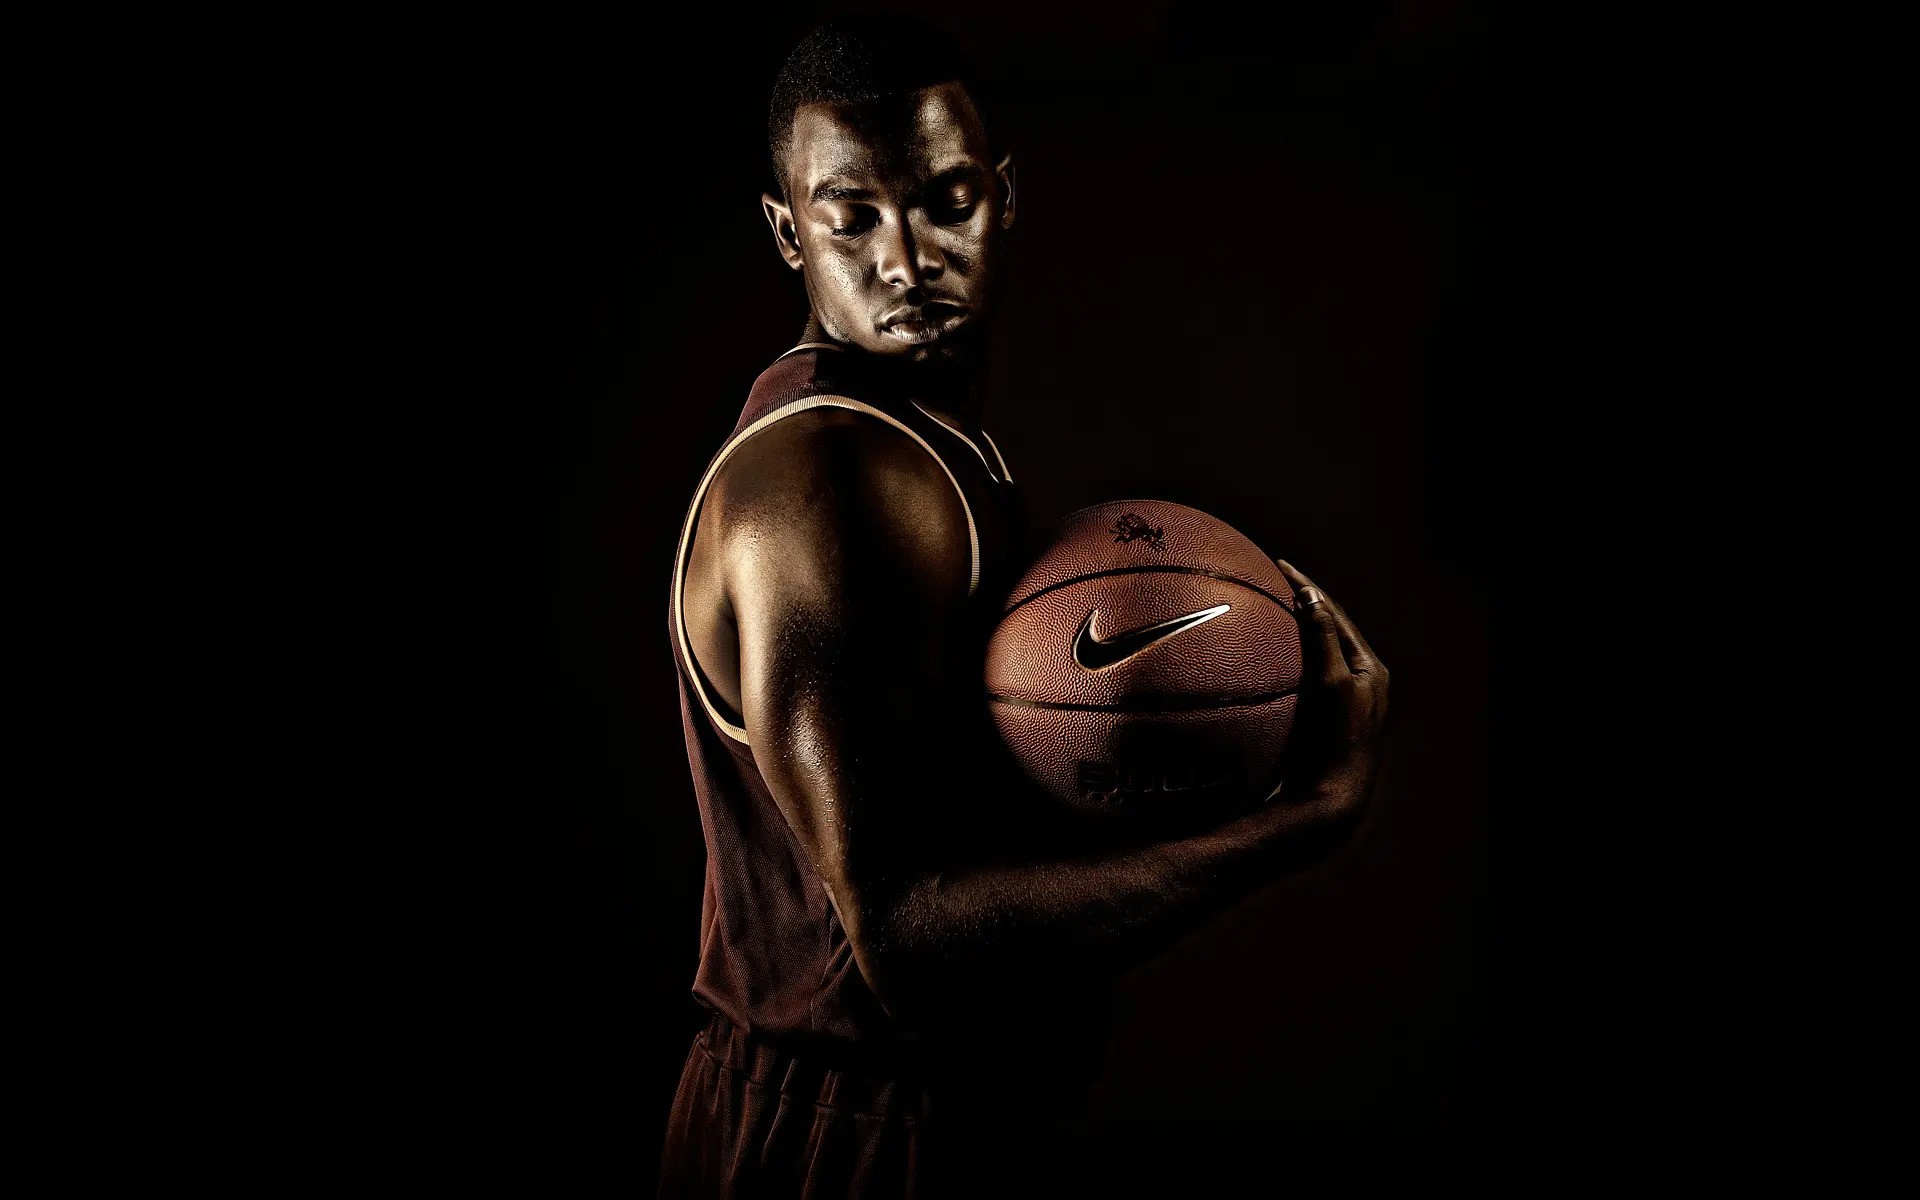 A man wearing a basketball uniform while holding a basketball